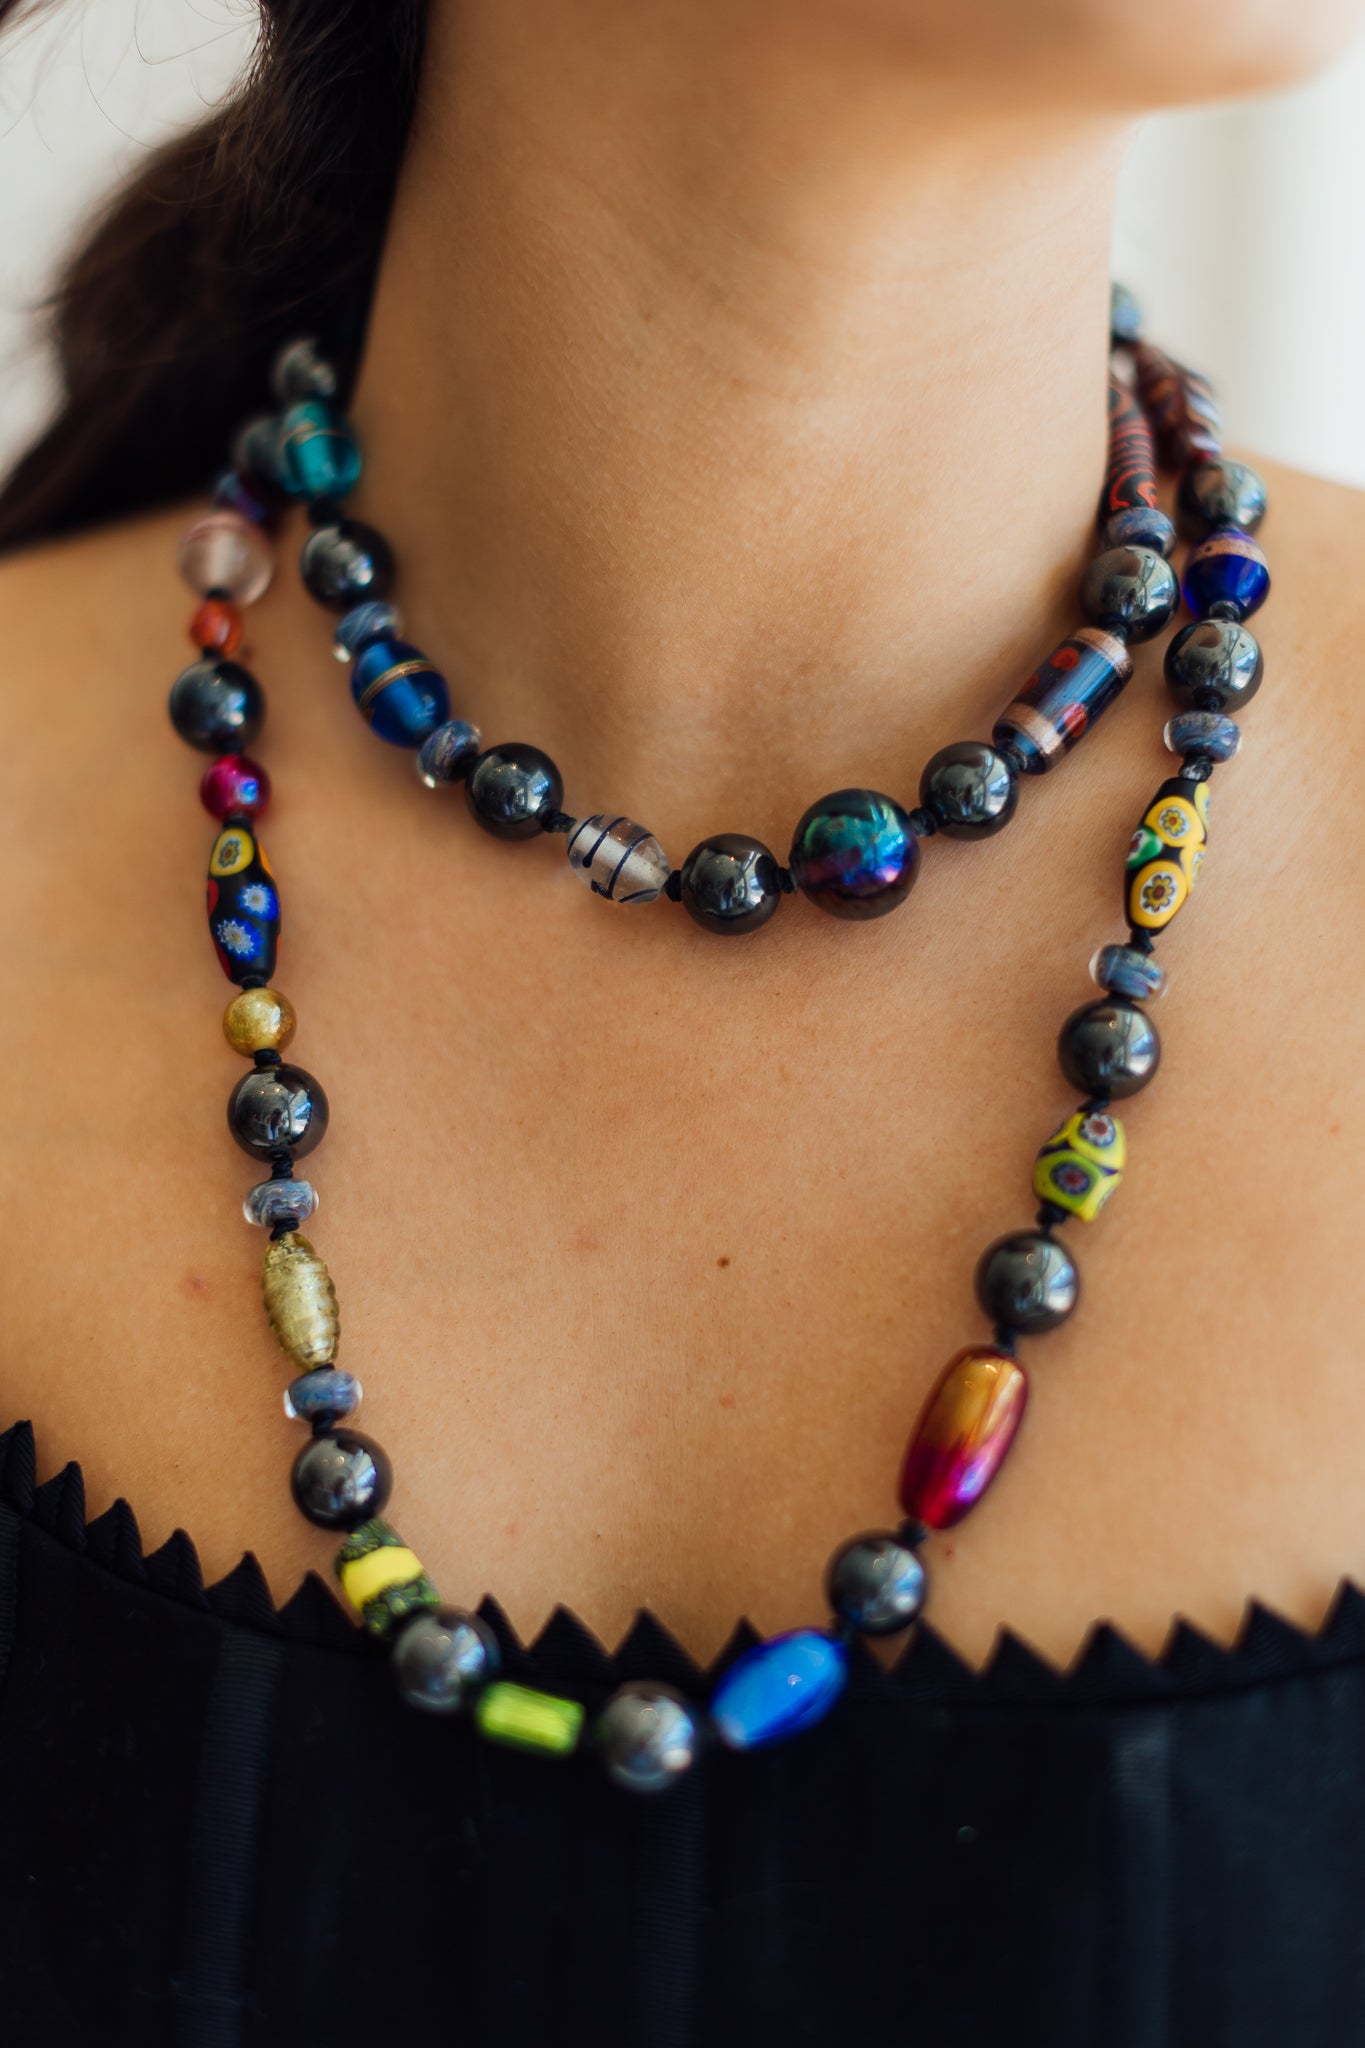 Matthew Swope Mixed Vintage Venetian Glass Beads with Hematite